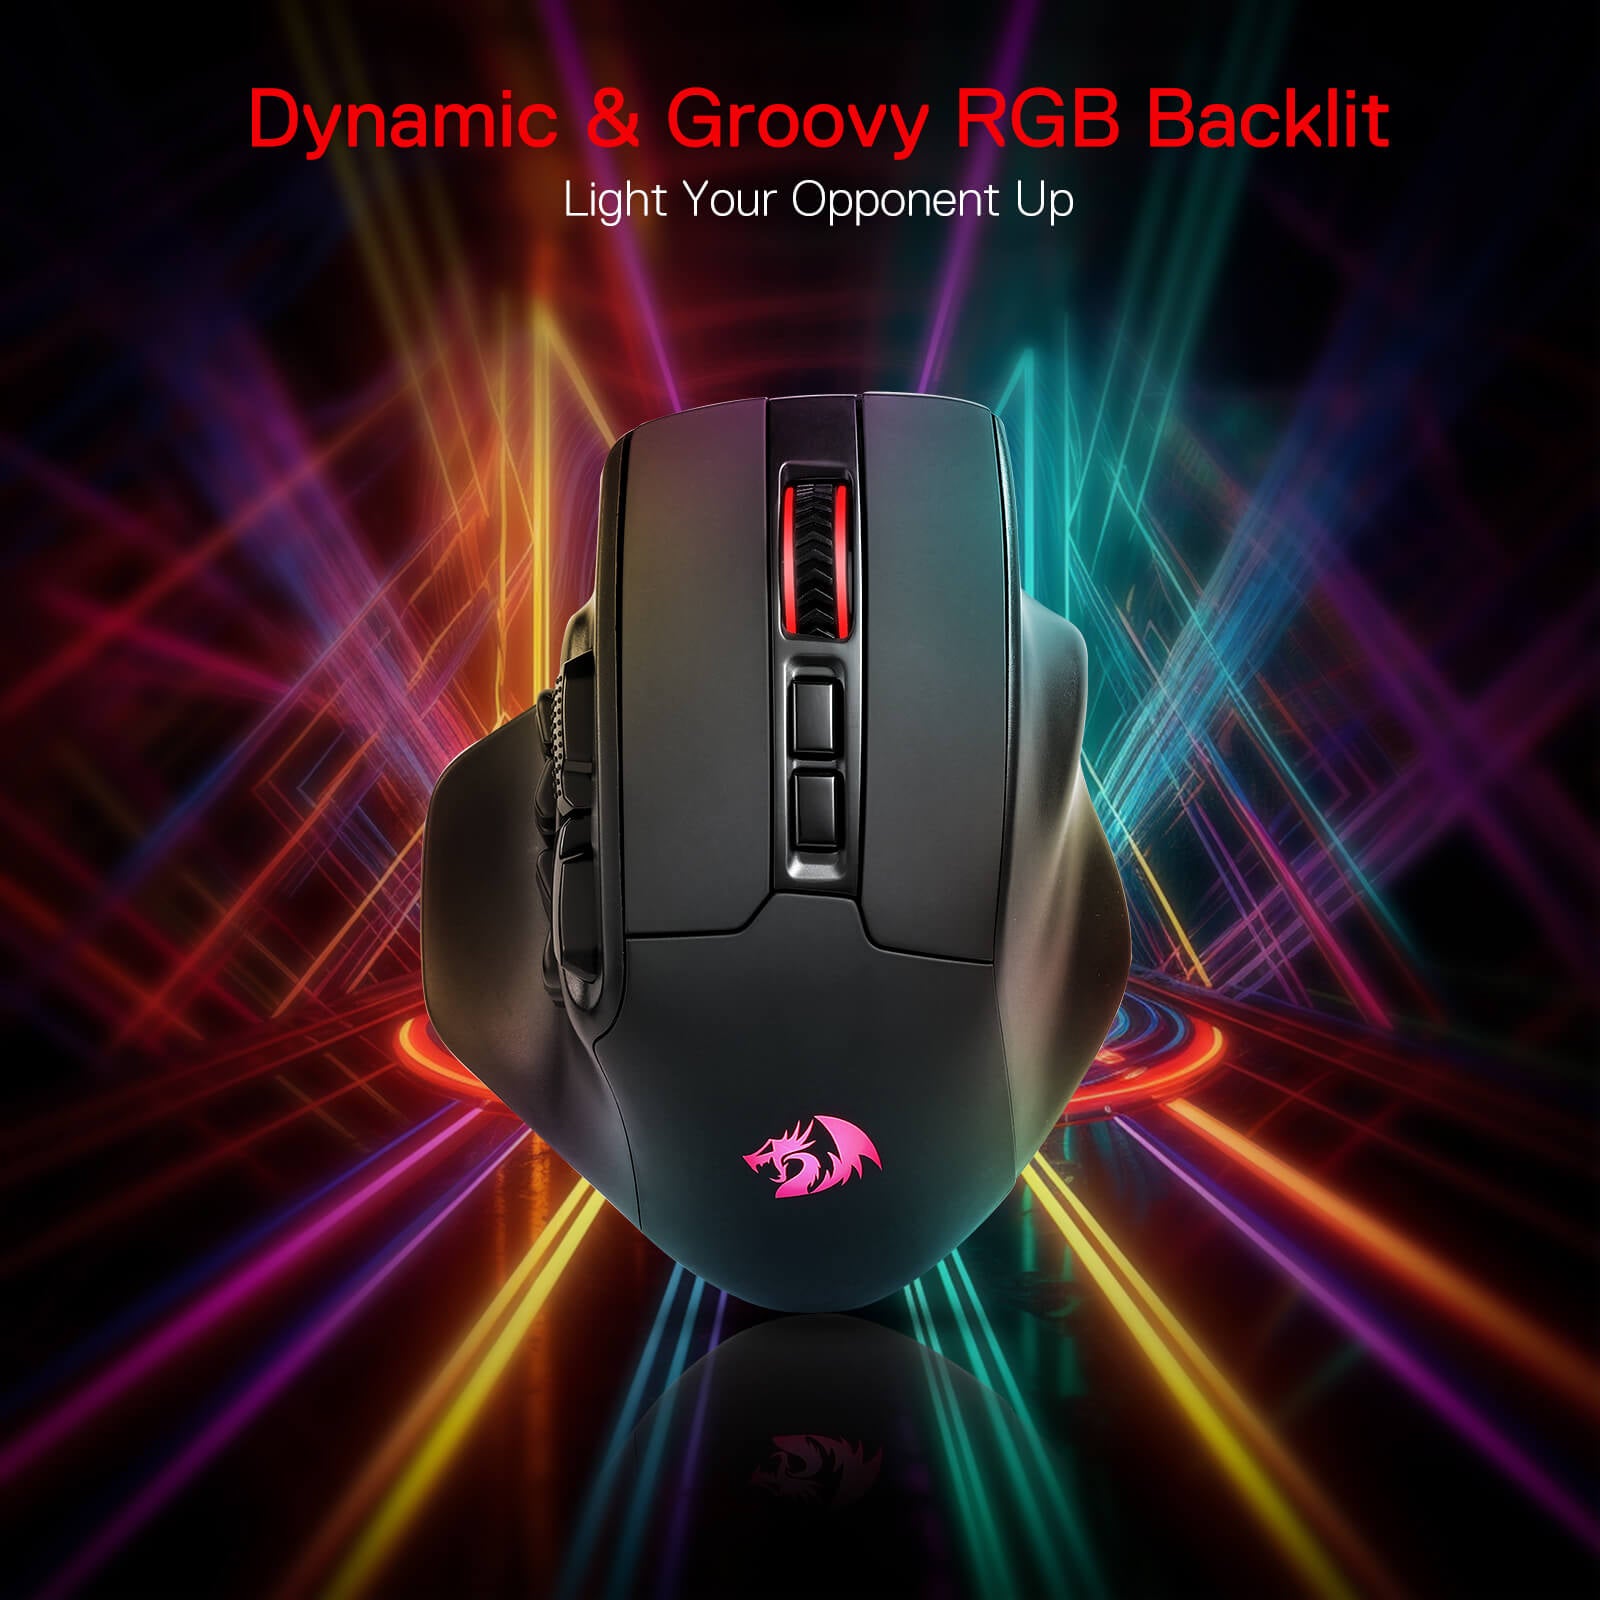 Freedo USB Wired Gaming Mouse, RGB LED Comfortable Grip Ergonomic